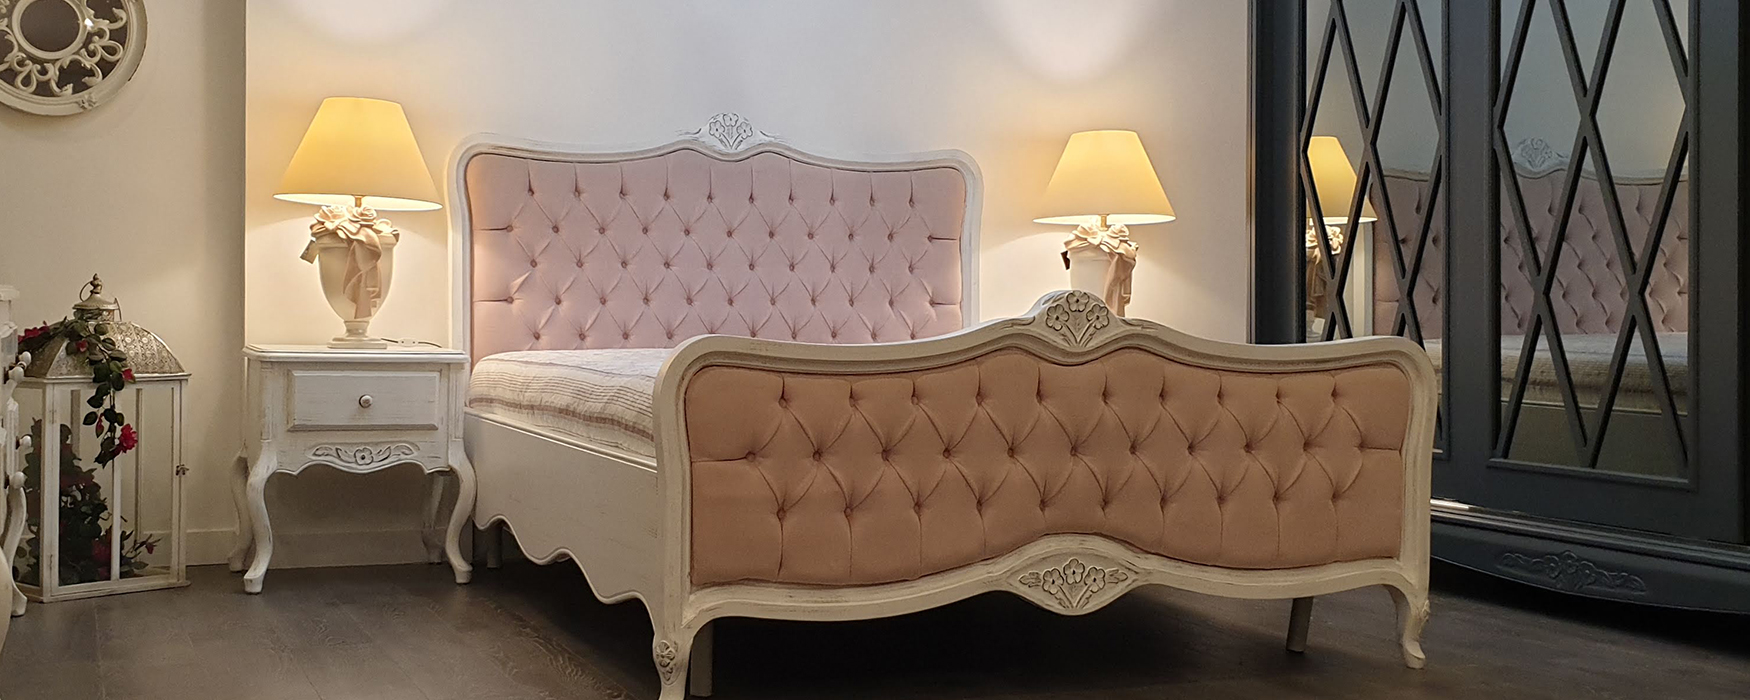 laura ashley bedroom furniture set